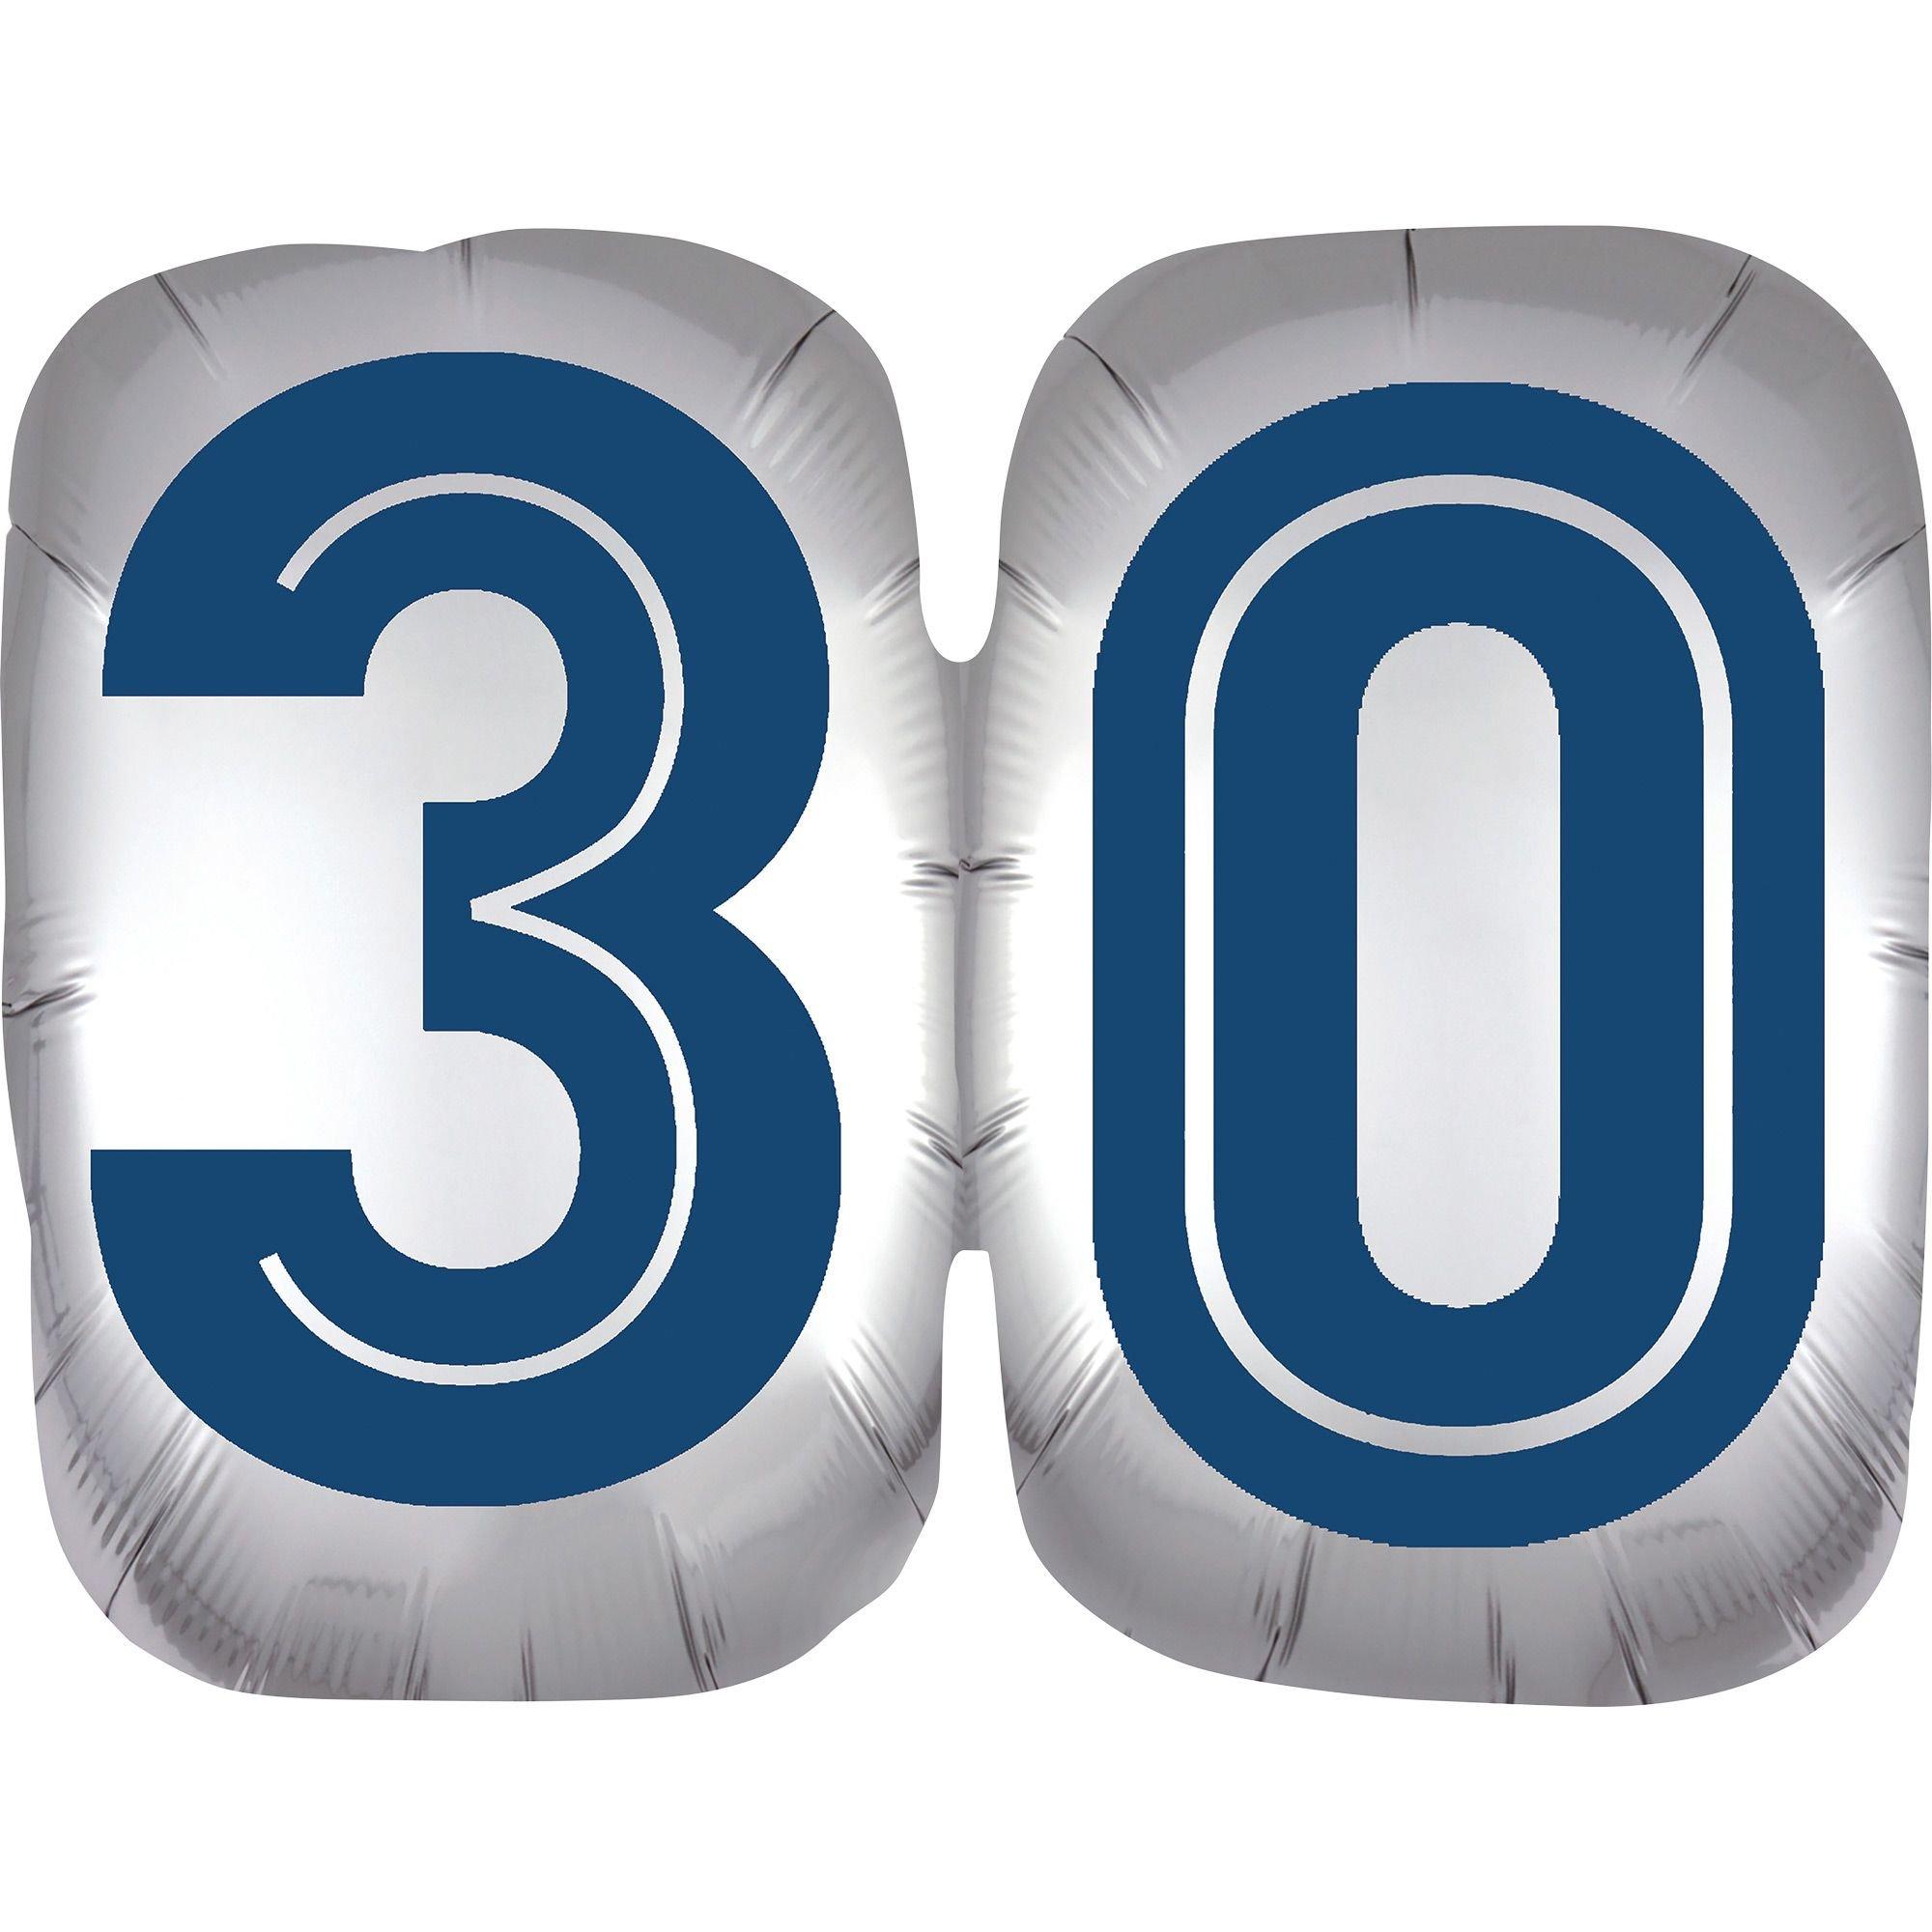 30 Milestone Birthday Foil Balloon, 25in x 20in - Happy Birthday Classic